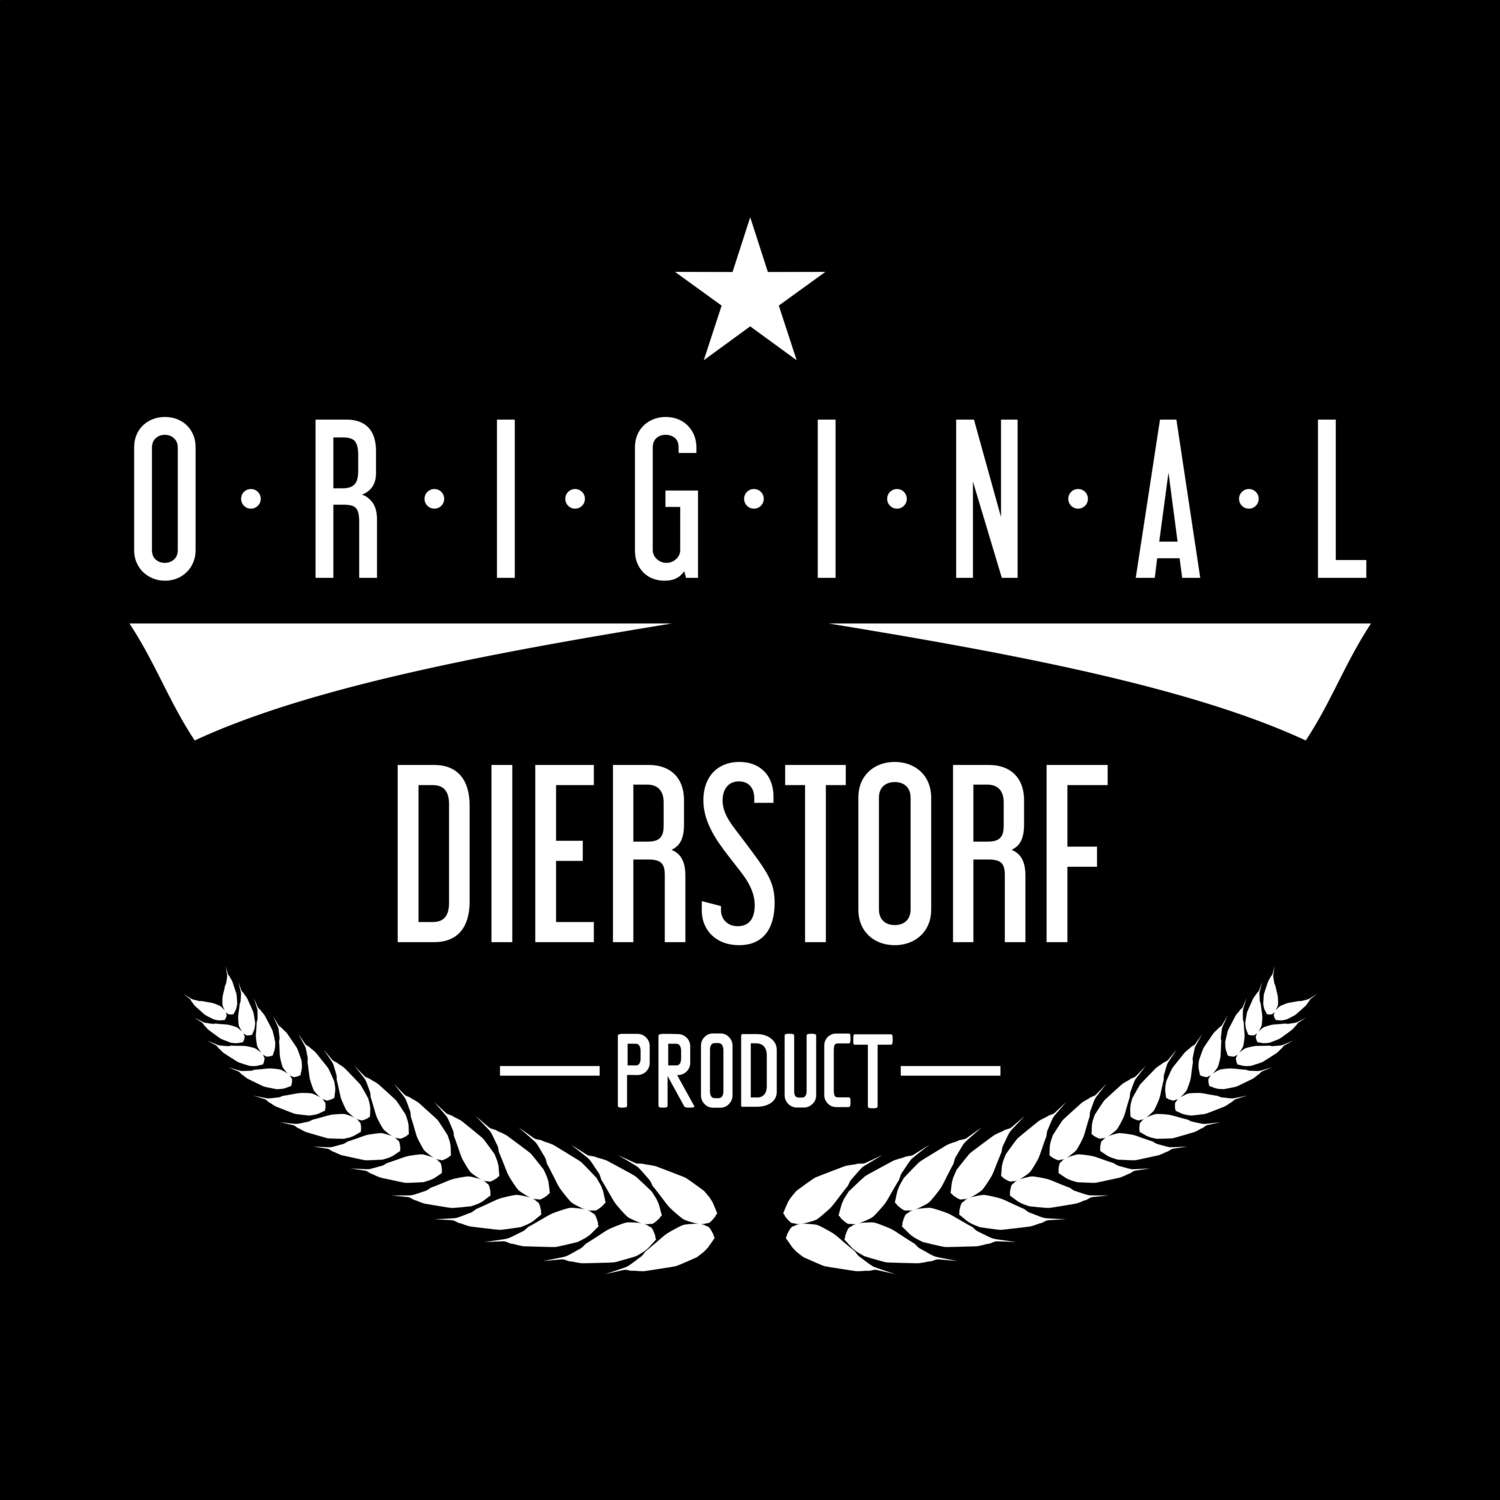 Dierstorf T-Shirt »Original Product«